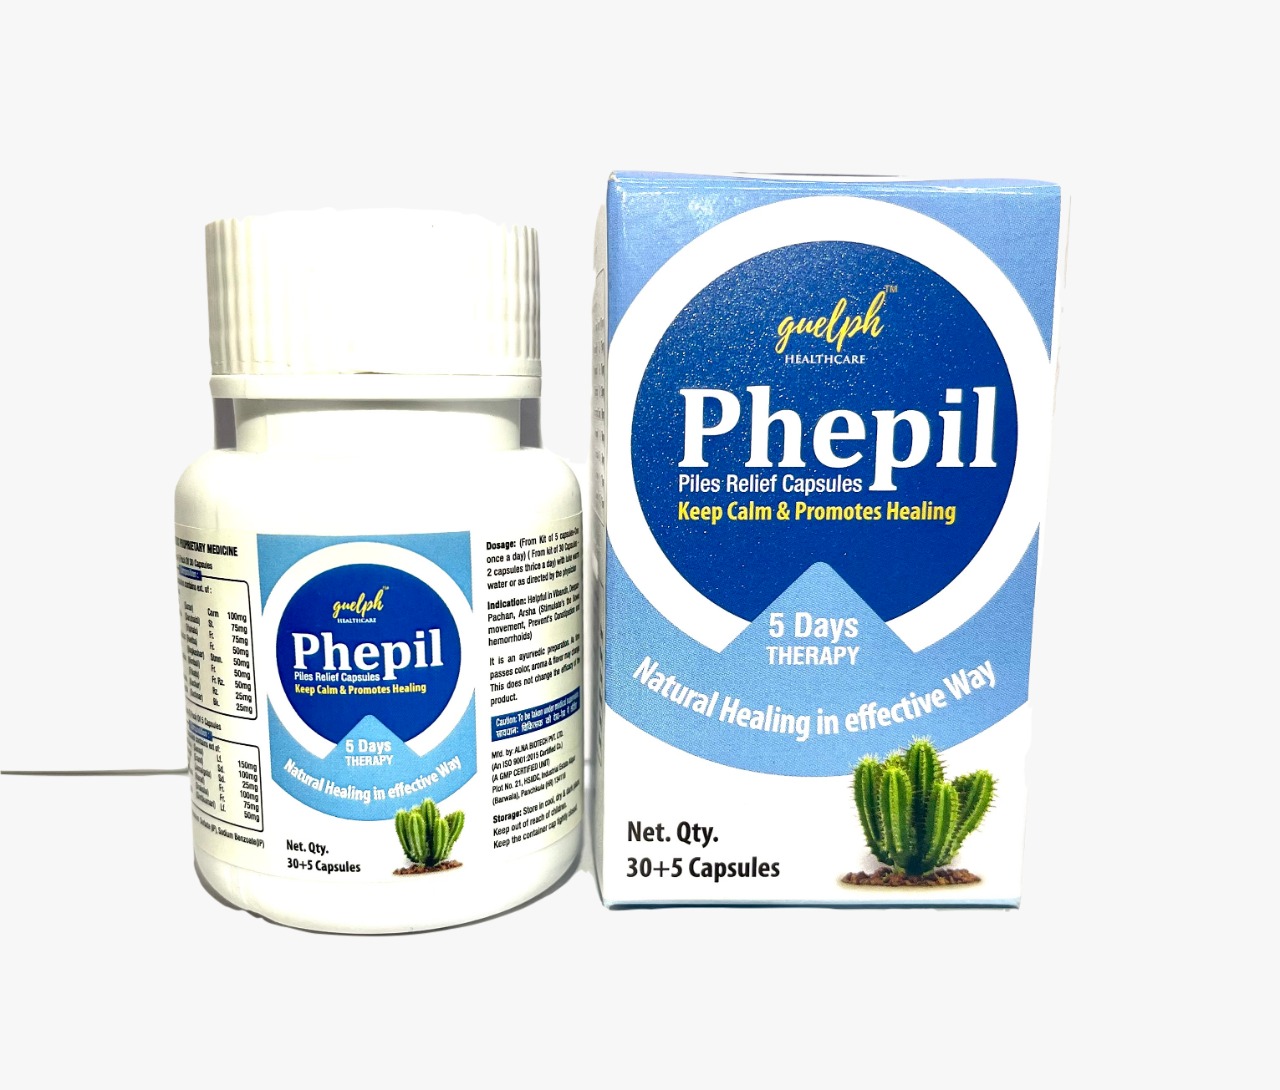 Product Name: PHEPIL  Kit Capsules 30 + 5 Pack for Piles Relief, Compositions of PHEPIL  Kit Capsules 30 + 5 Pack for Piles Relief are Suran, Daruhaldi, Triphala, Reetha, Nagkeshar, Nimboli, Trikatu, Kachur, Kachnar (Pack of 30) Senna, Erand, Jamalgota, Harad, Draksha, Ghritkumari (Pack of 5) - Guelph Healthcare Pvt. Ltd